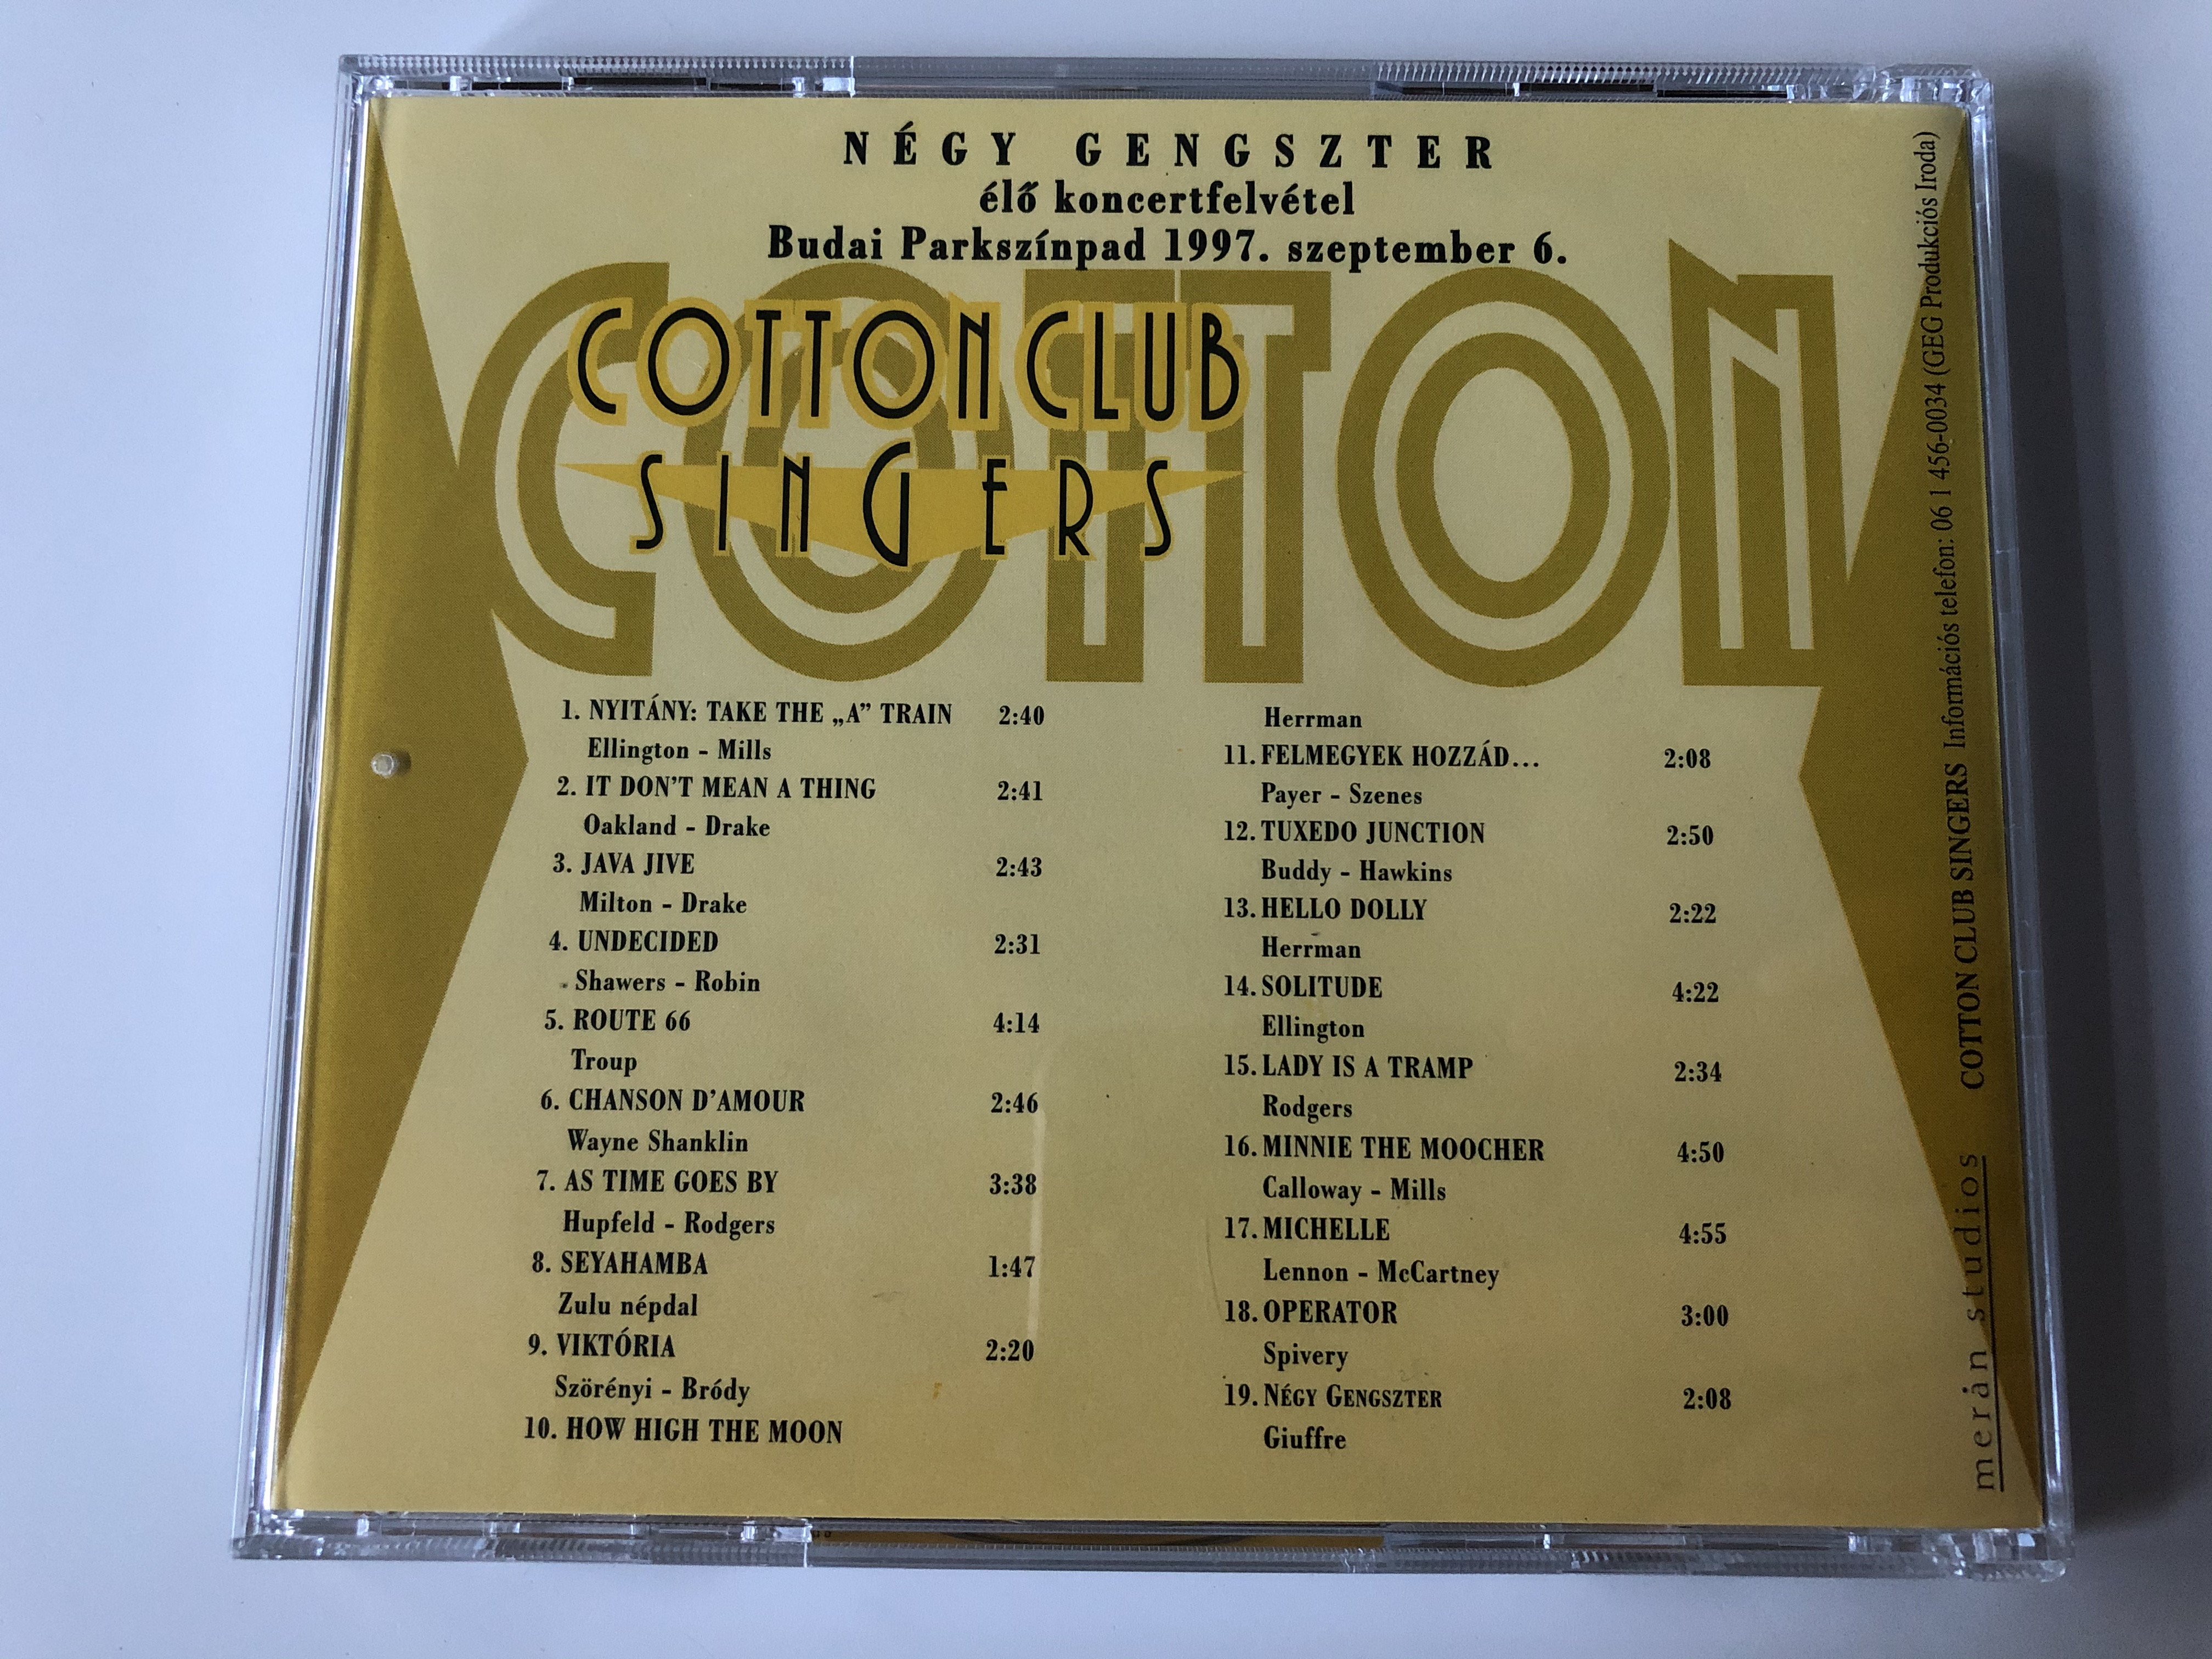 cotton-club-singers-n-gy-gengszter-koncertfelvetel-1997.-szeptember-6.-budai-parkszinpad-audio-cd-c.c.s.-02-8-.jpg